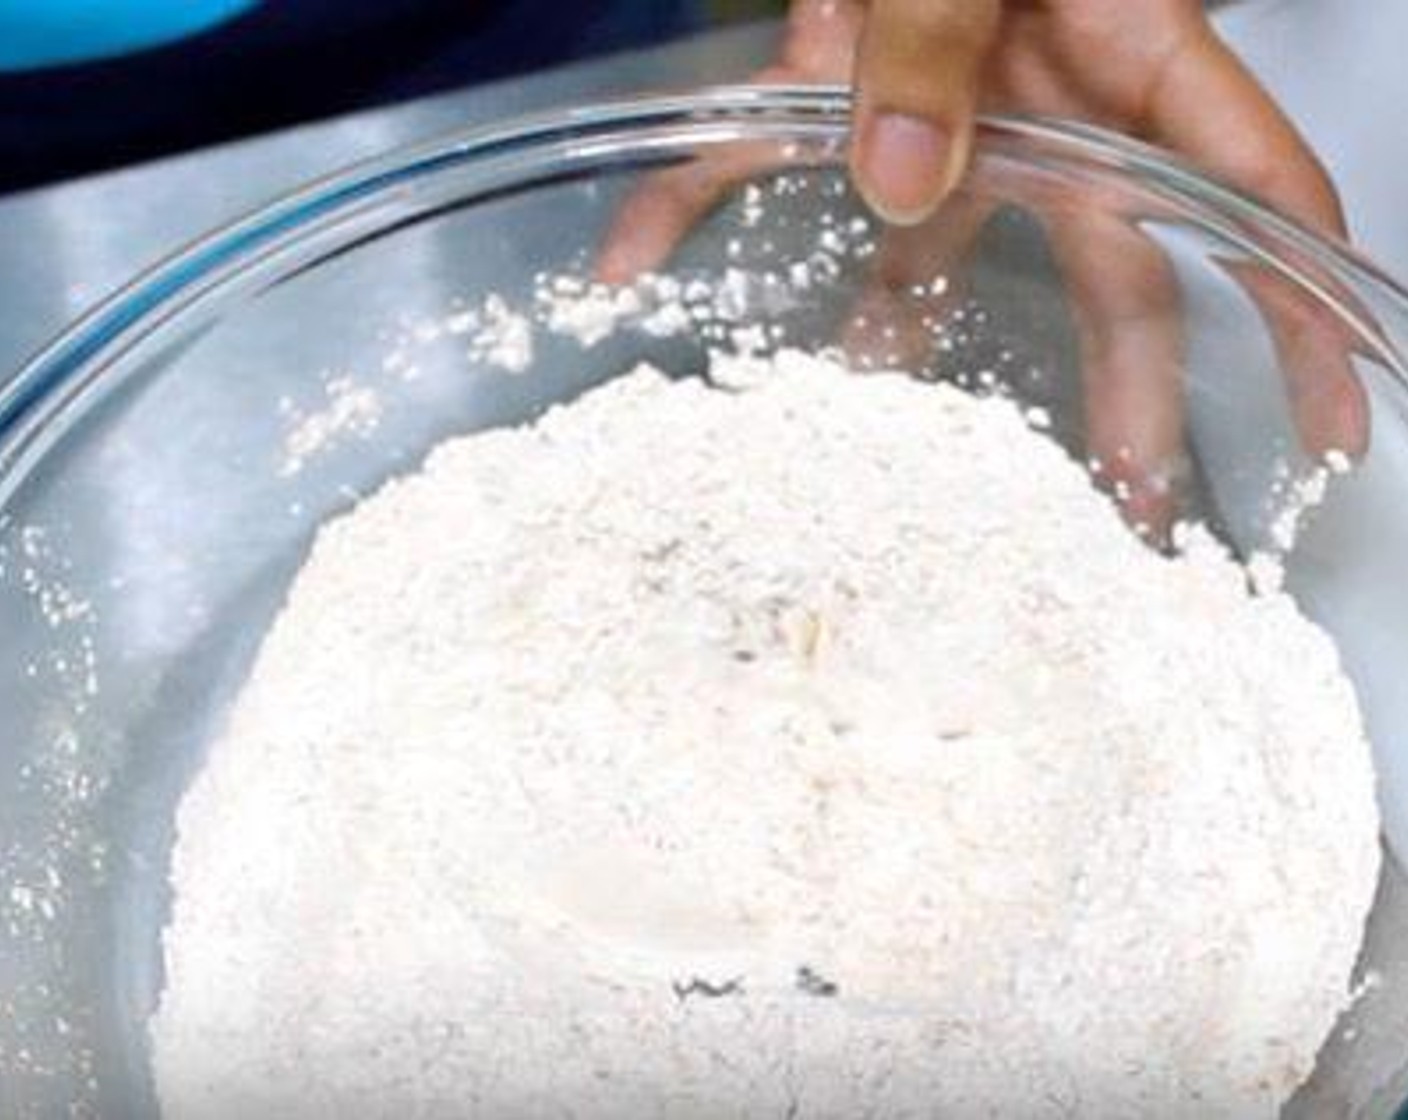 step 2 In a mixing bowl, add All-Purpose Flour (2 cups), Ground Cinnamon (1/2 Tbsp), Ground Nutmeg (1/4 tsp), Salt (1/2 tsp), Baking Soda (1 tsp), and Baking Powder (1 tsp). Stir to combine.